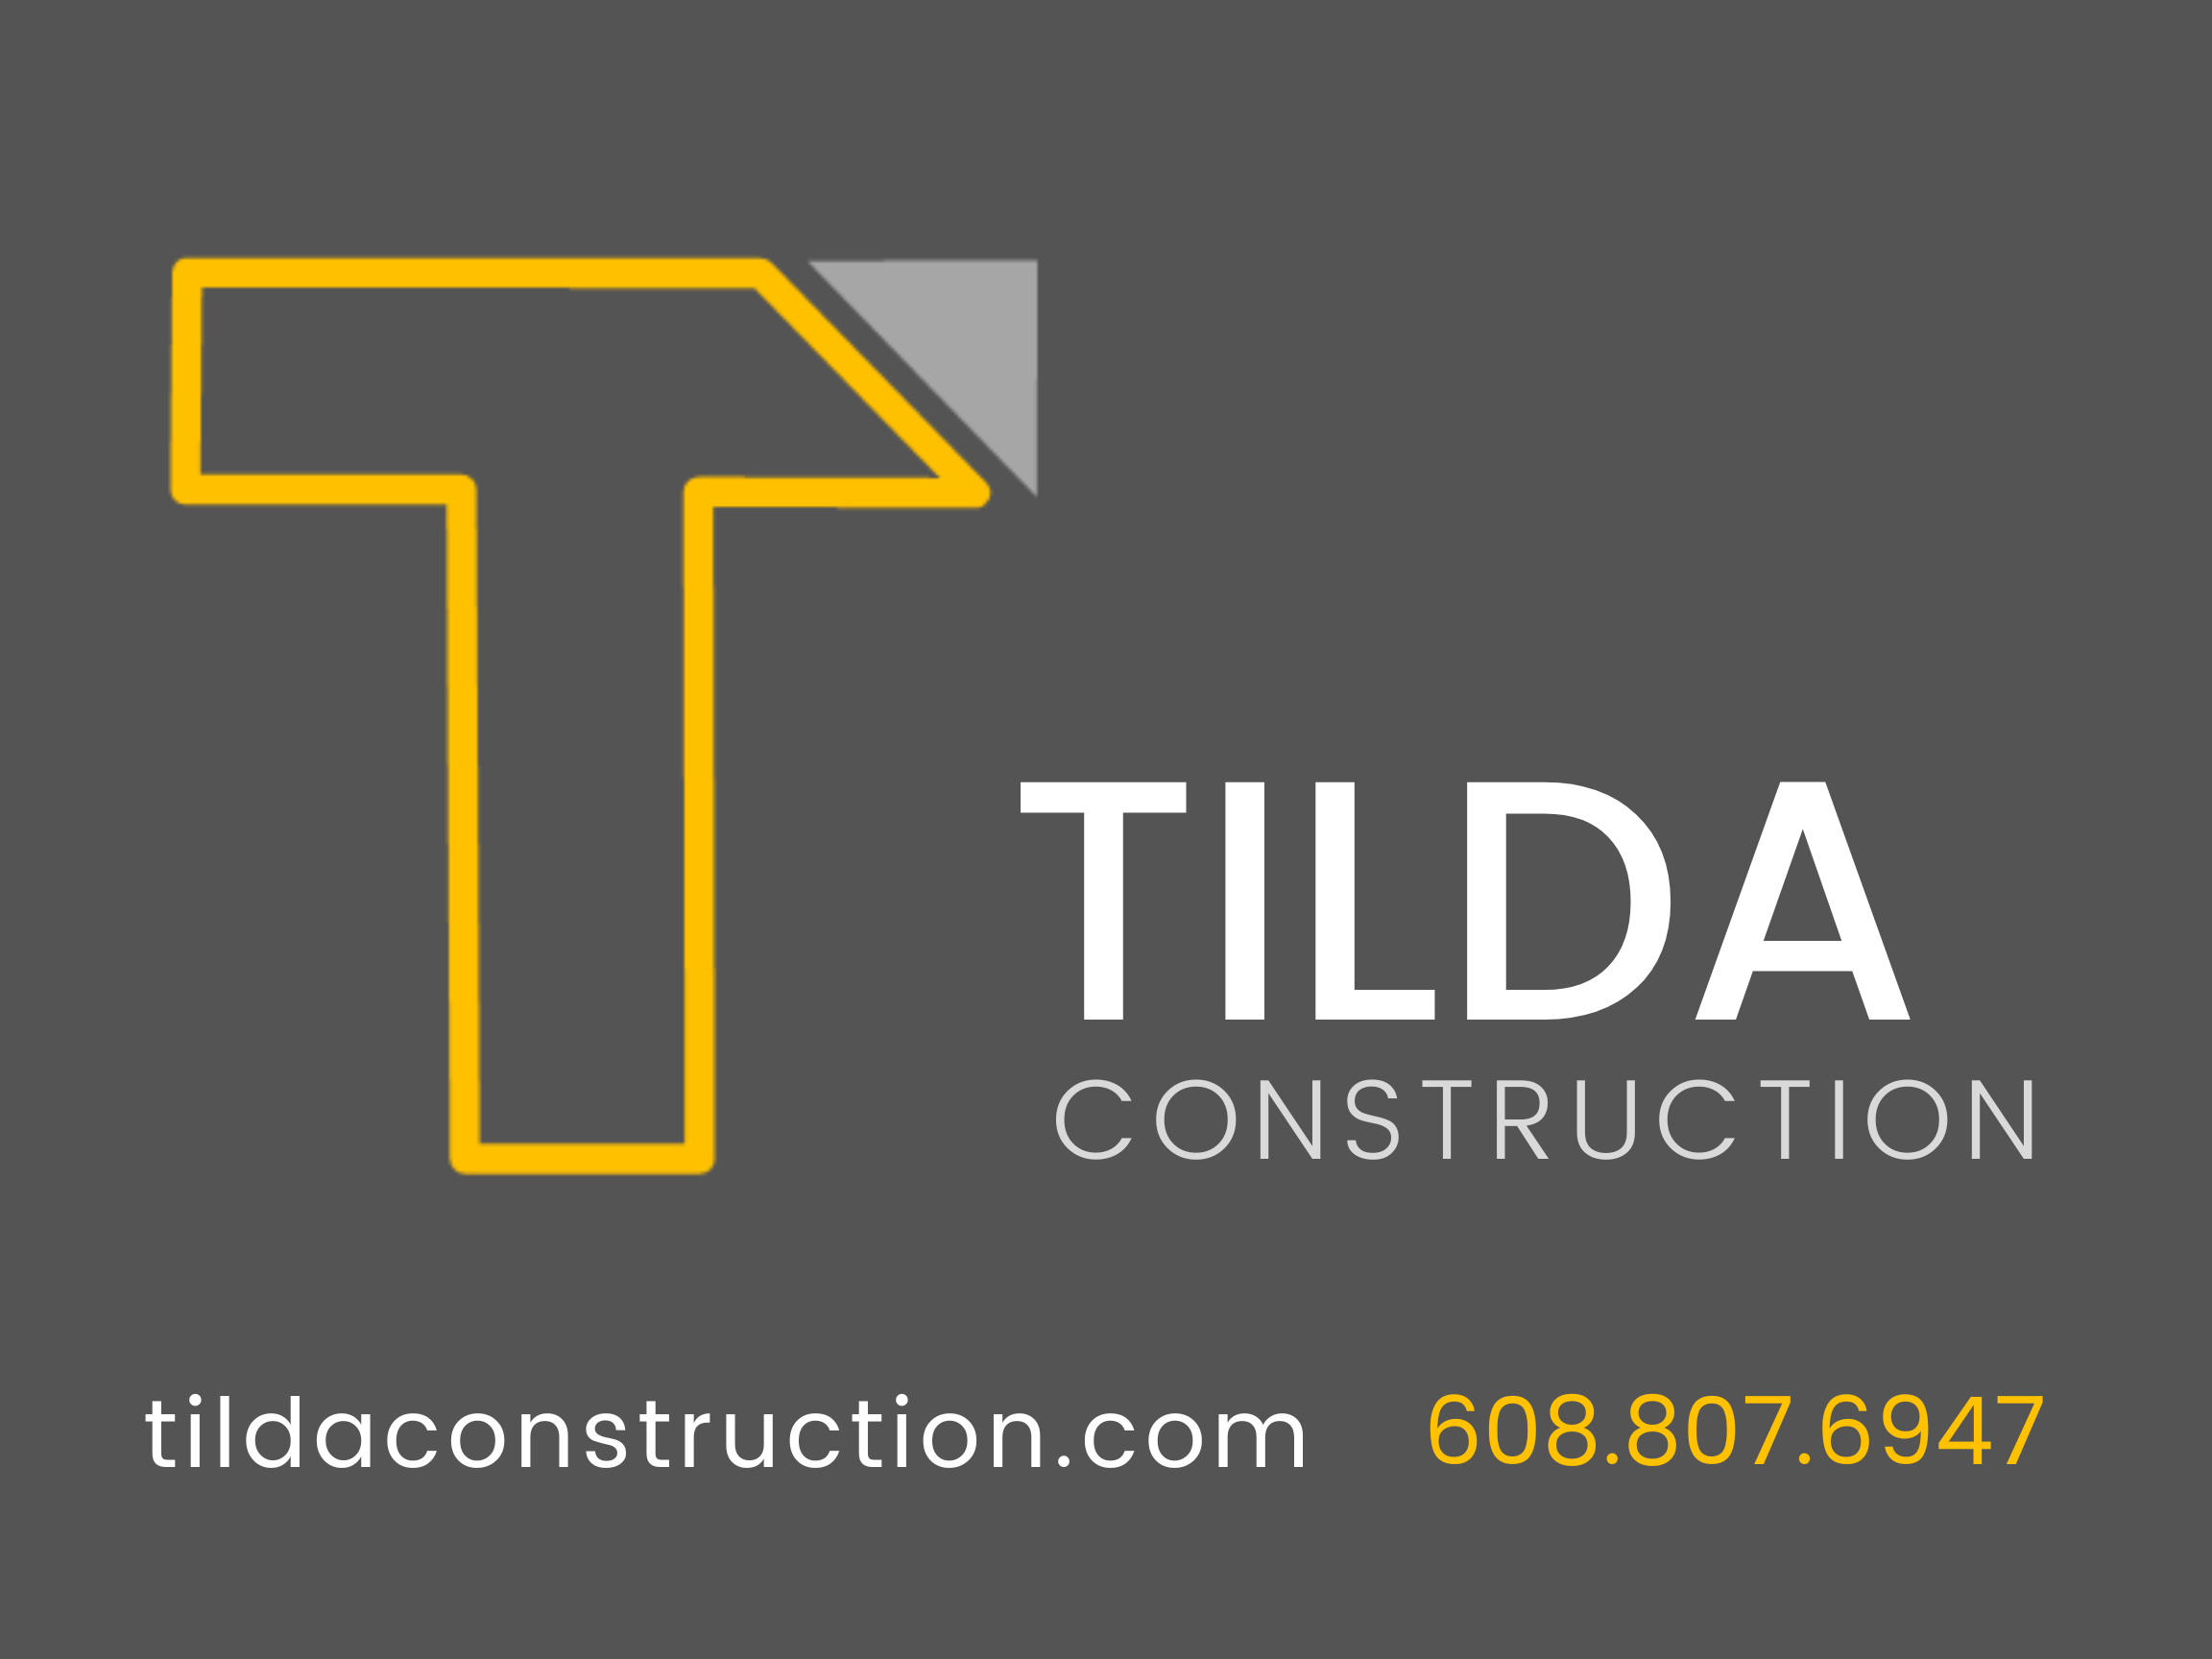 Tilda Construction